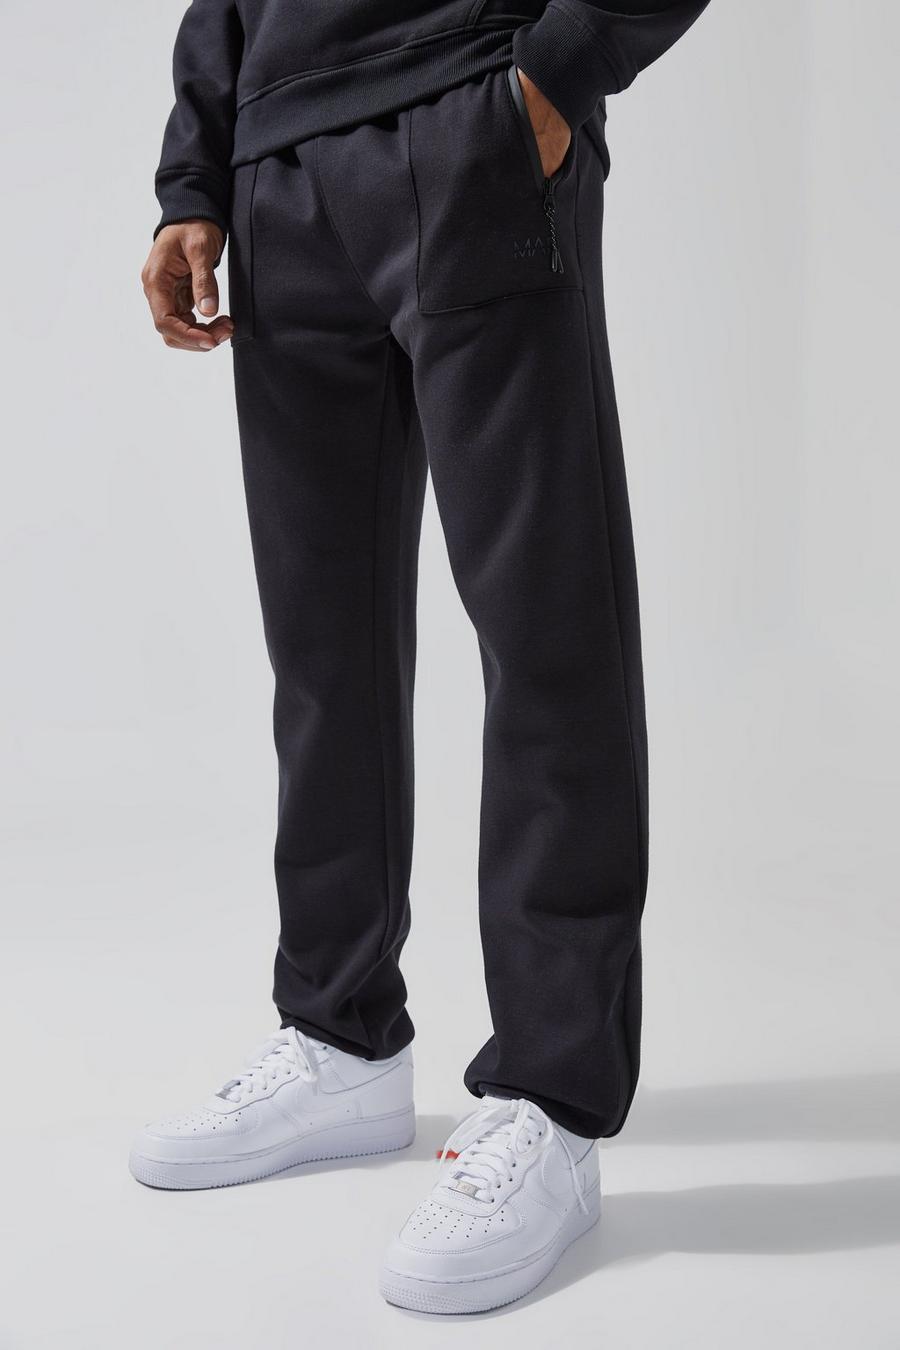 Pantaloni tuta Man Active Tech con zip sul fondo, Black